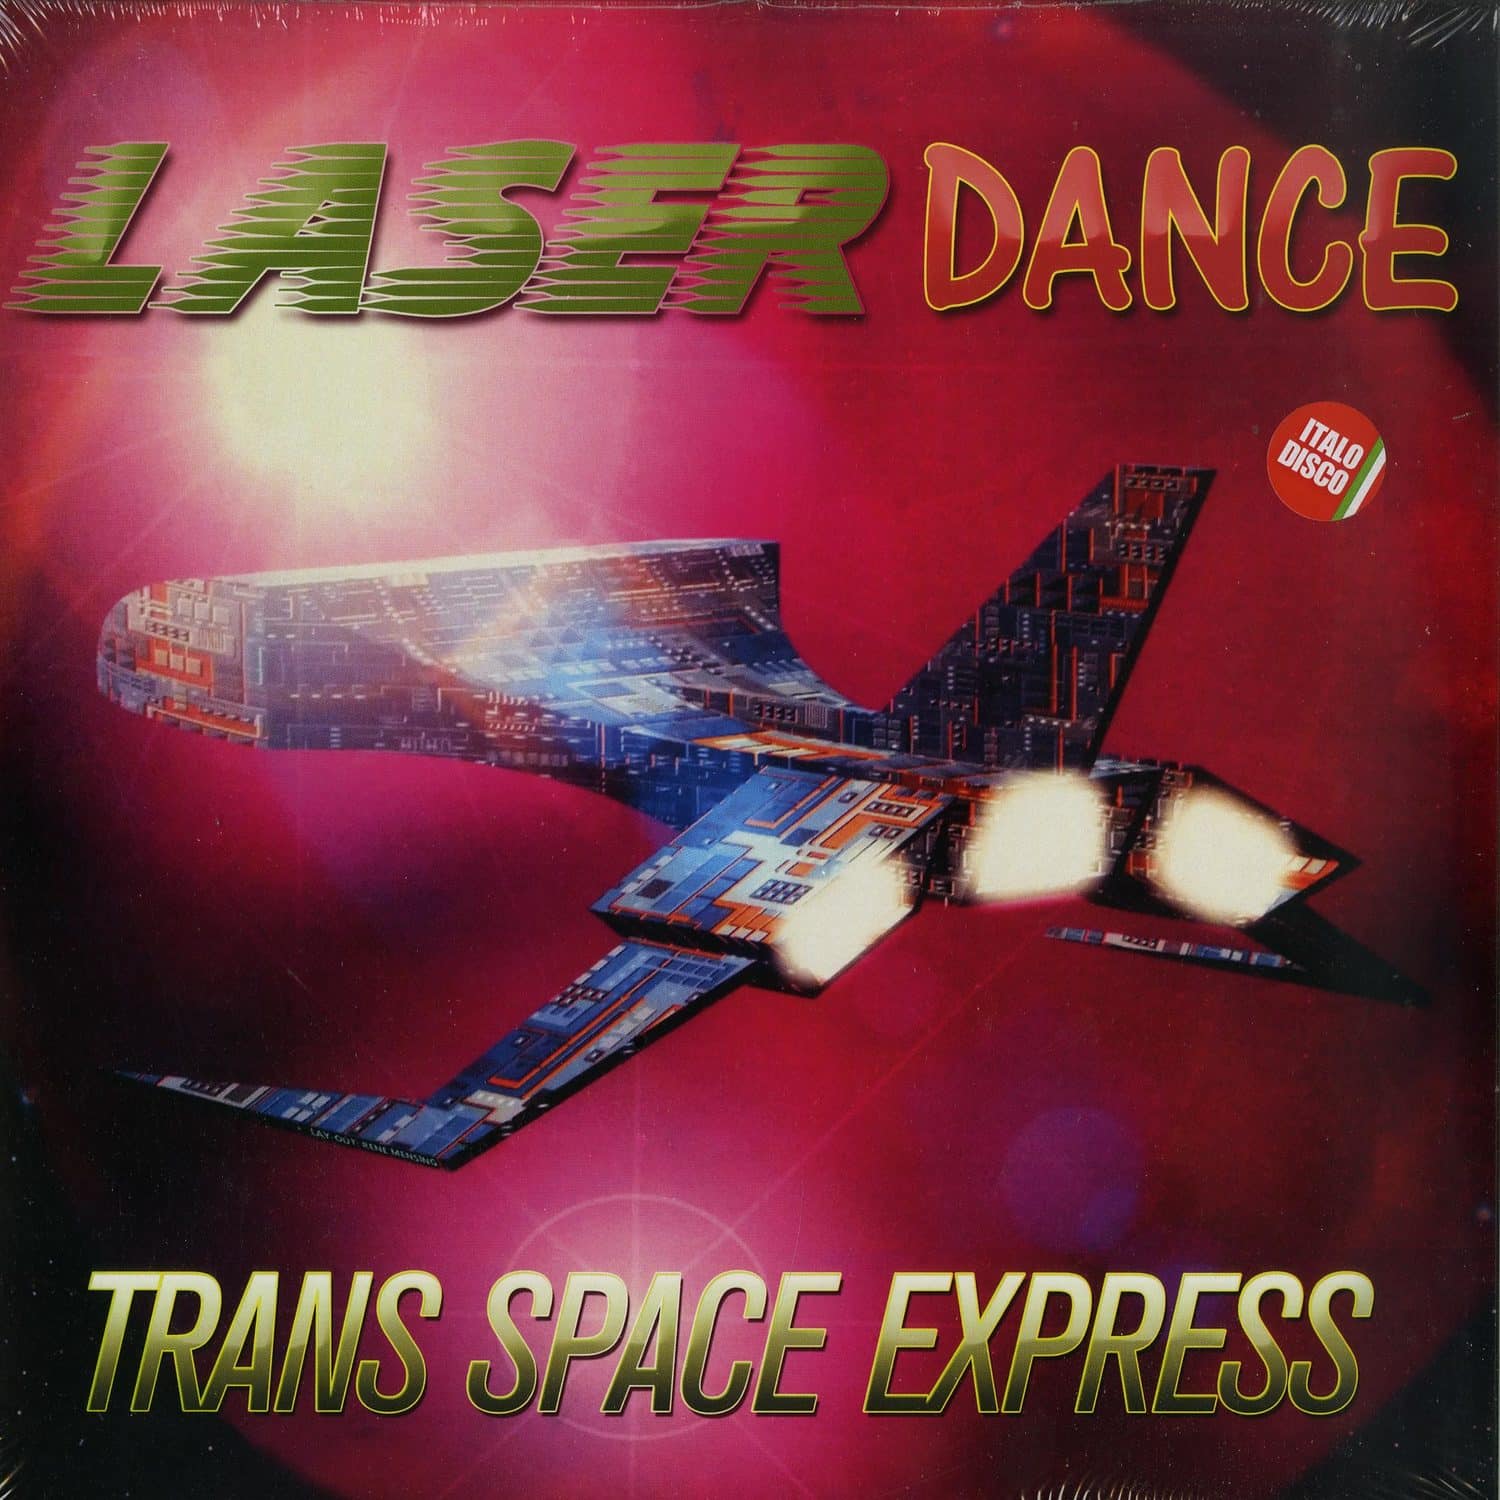 Laserdance - TRANS SPACE EXPRESS 